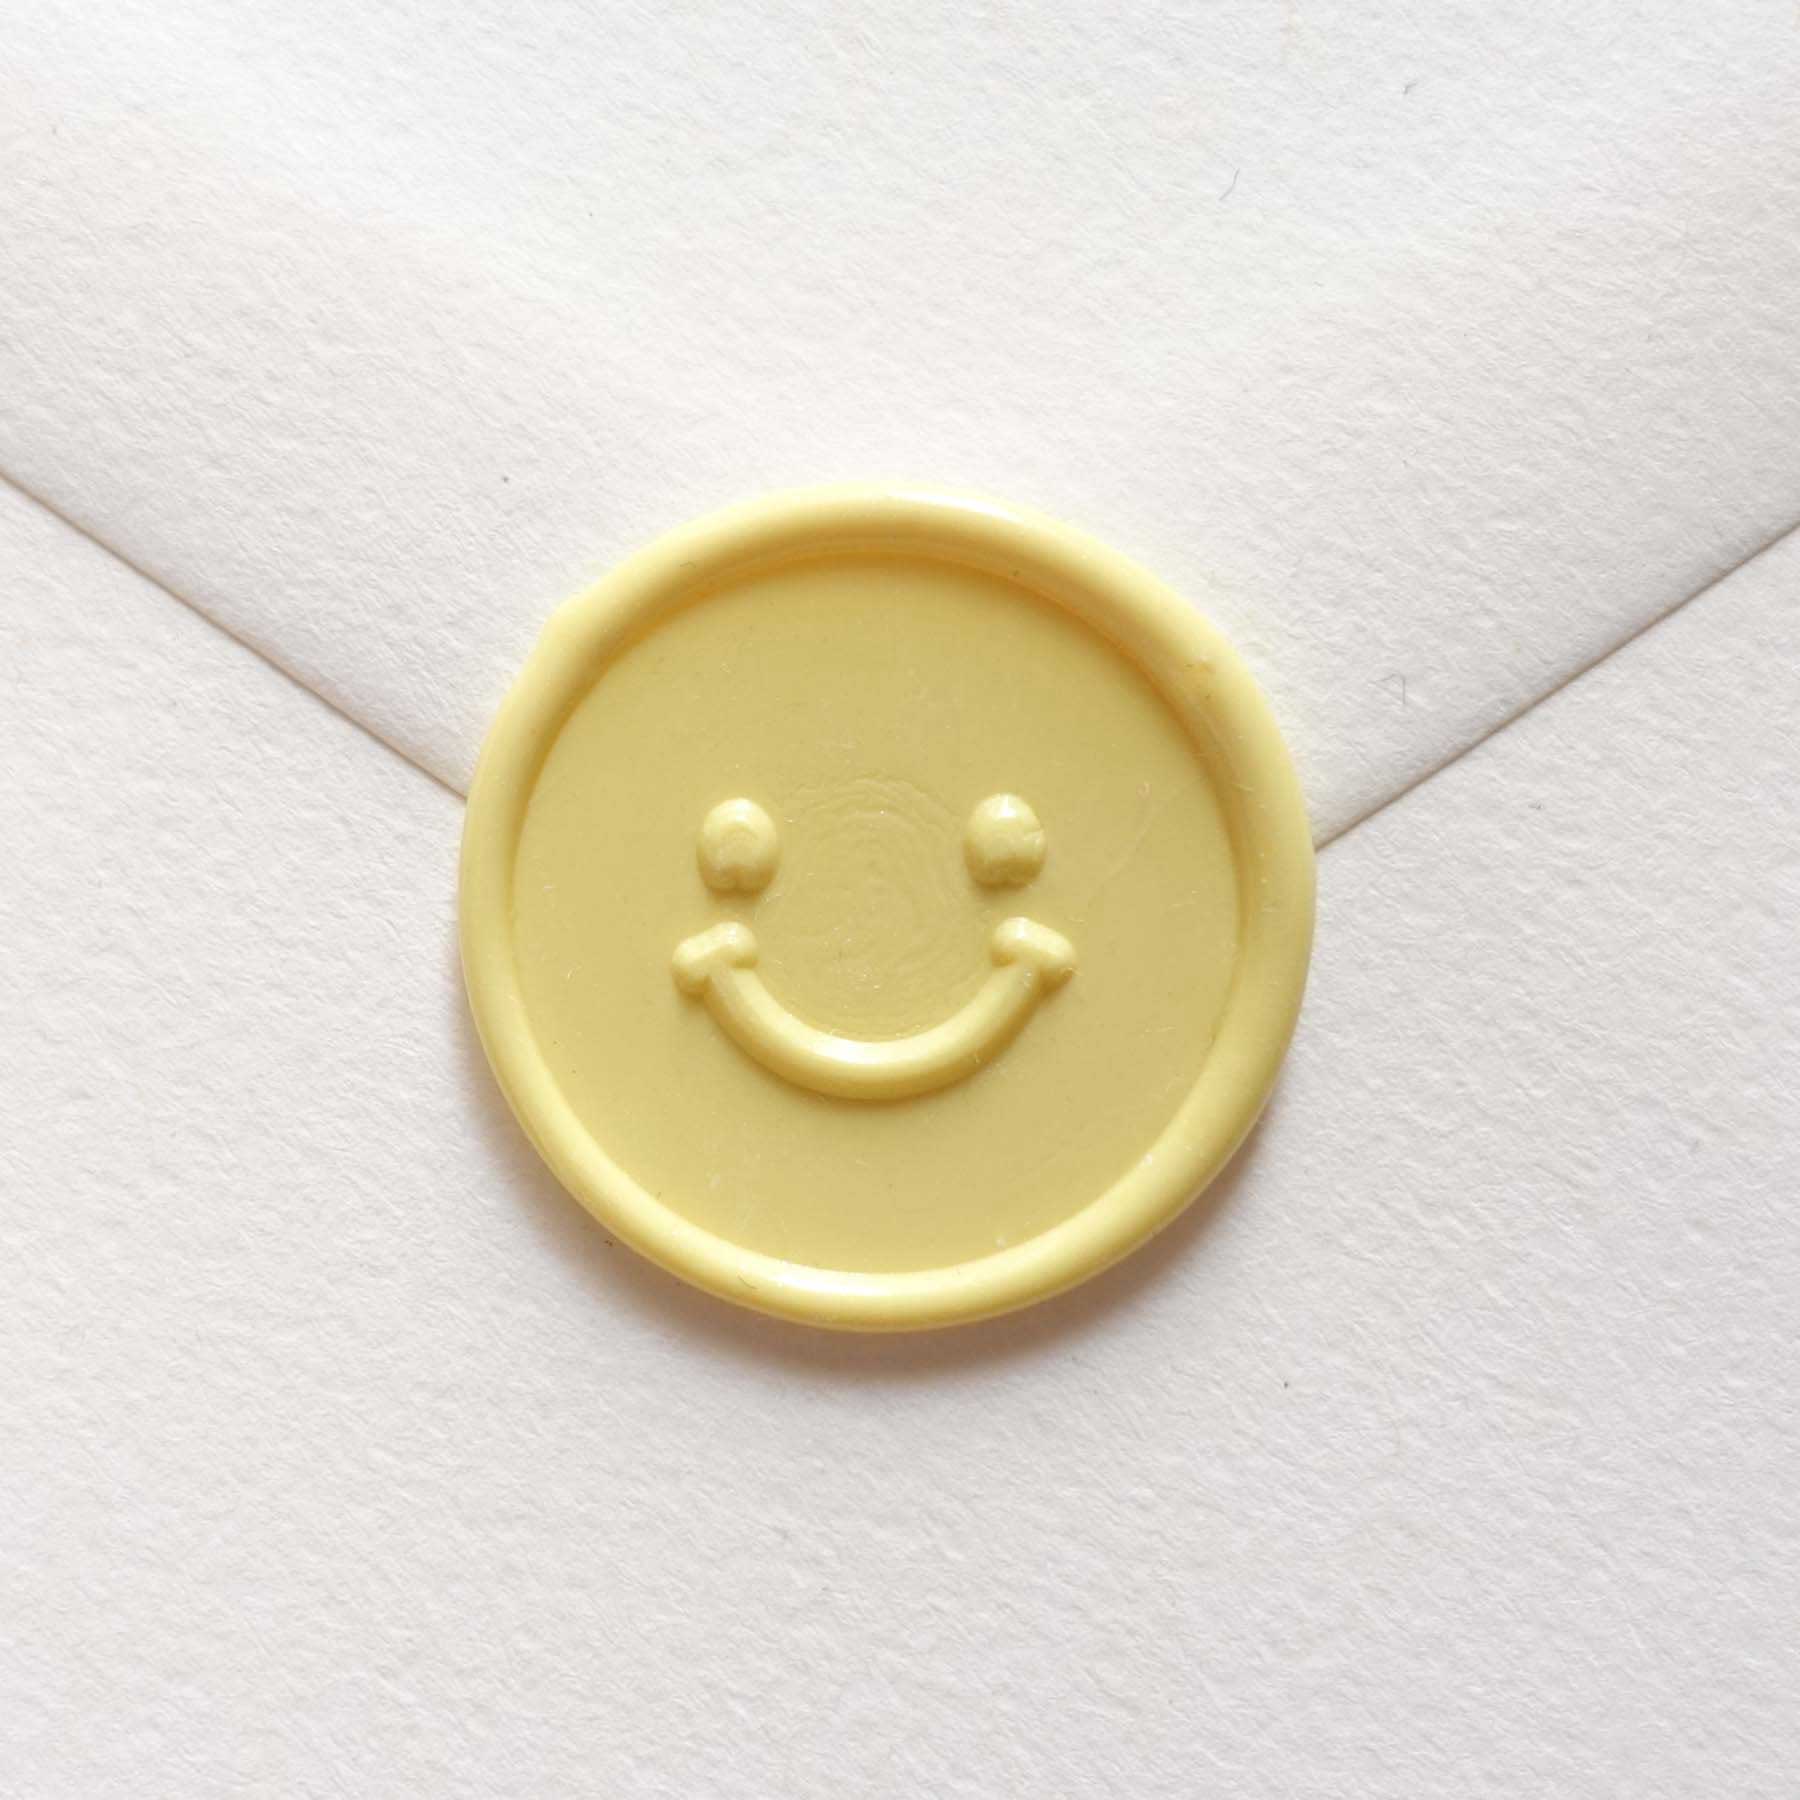 yellow smiley face emoji wax seal fiona ariva australia